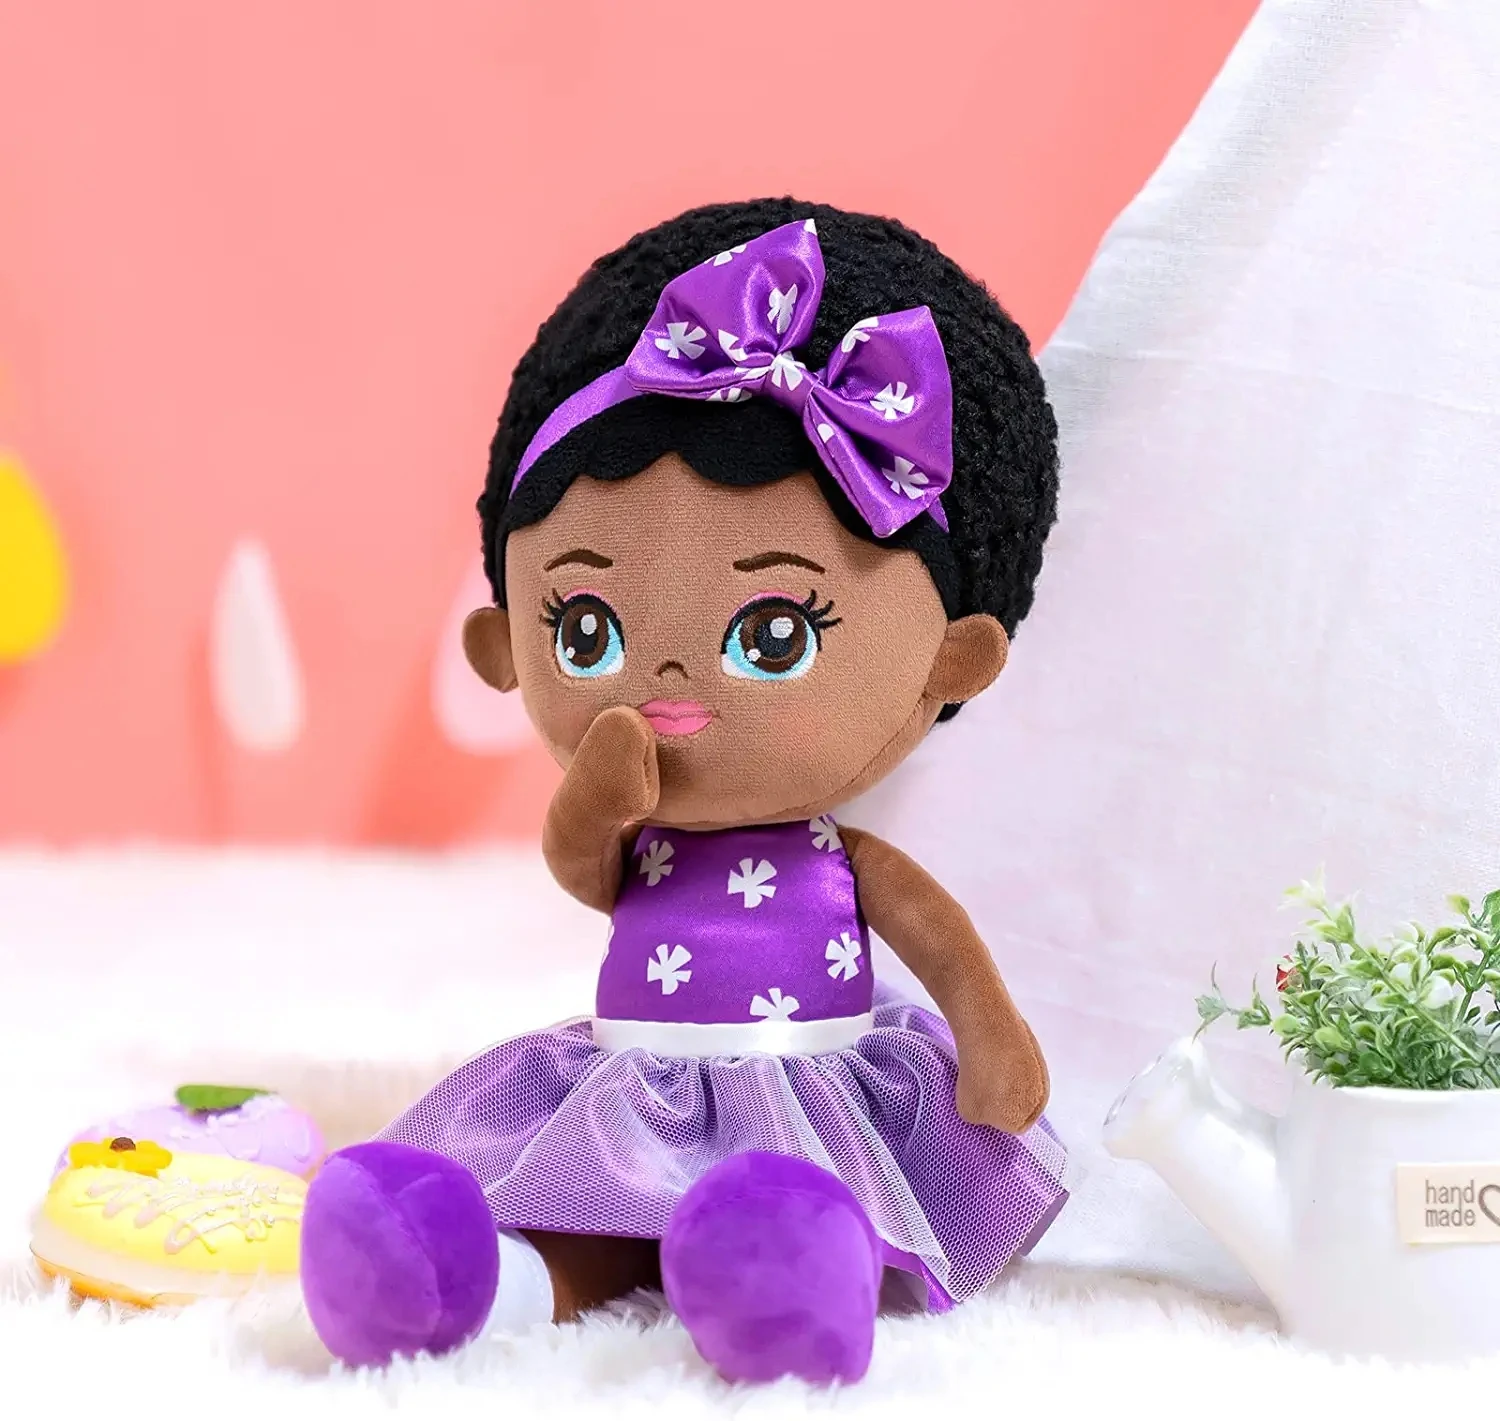 OUOZZZ 35cm Plush Baby Doll African American Doll Kawaii Deep Skin Tone Stuffed Ragdoll For Girls Kids Cute Plush Toy Dolls Gift